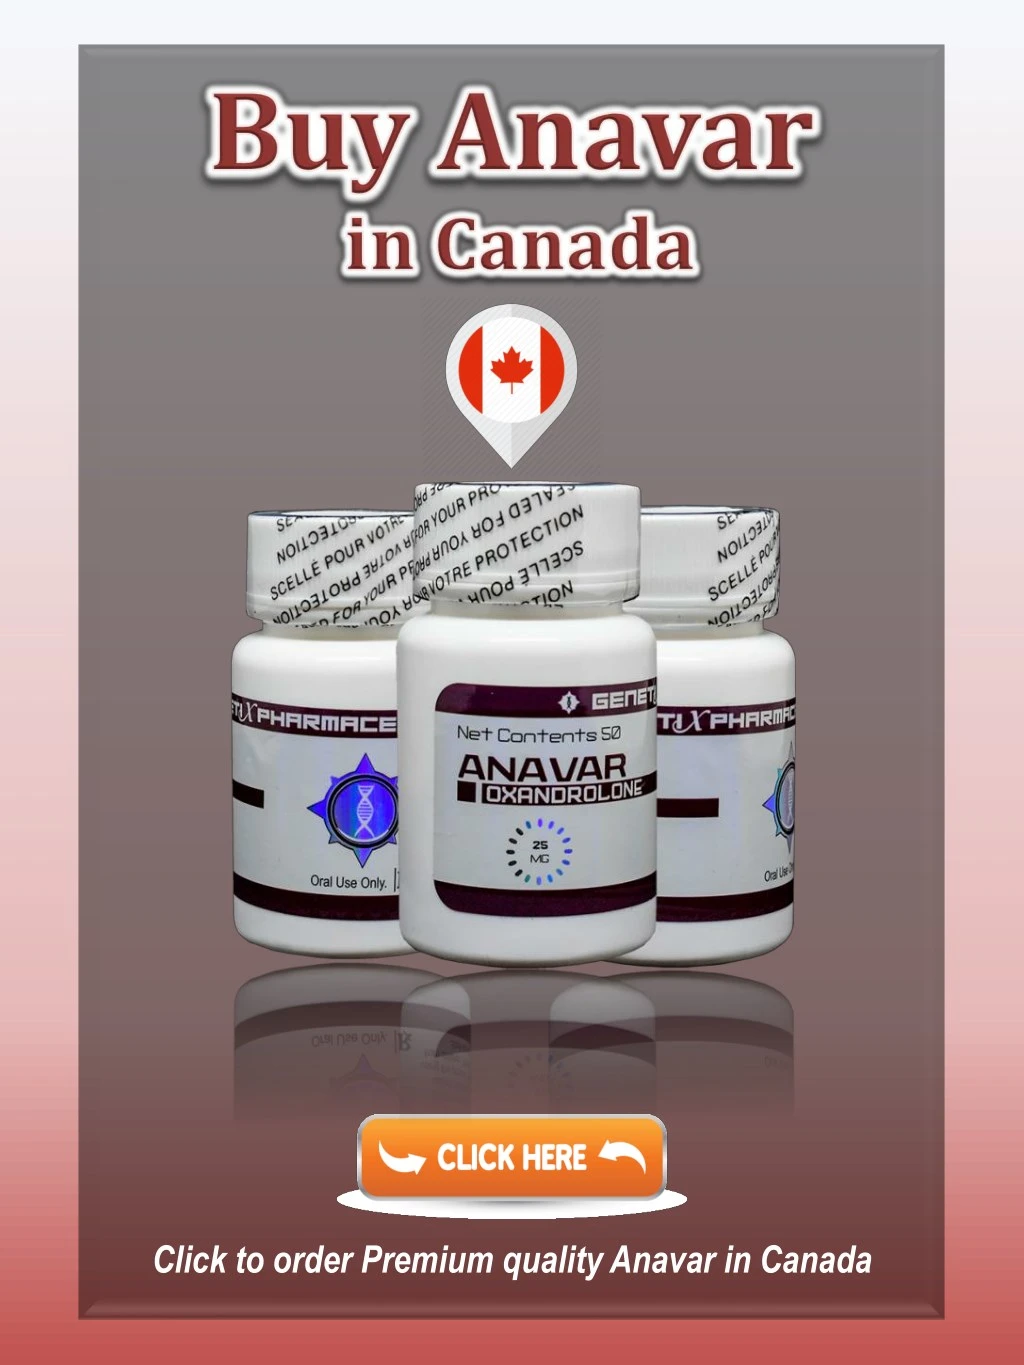 click to order premium quality anavar in canada